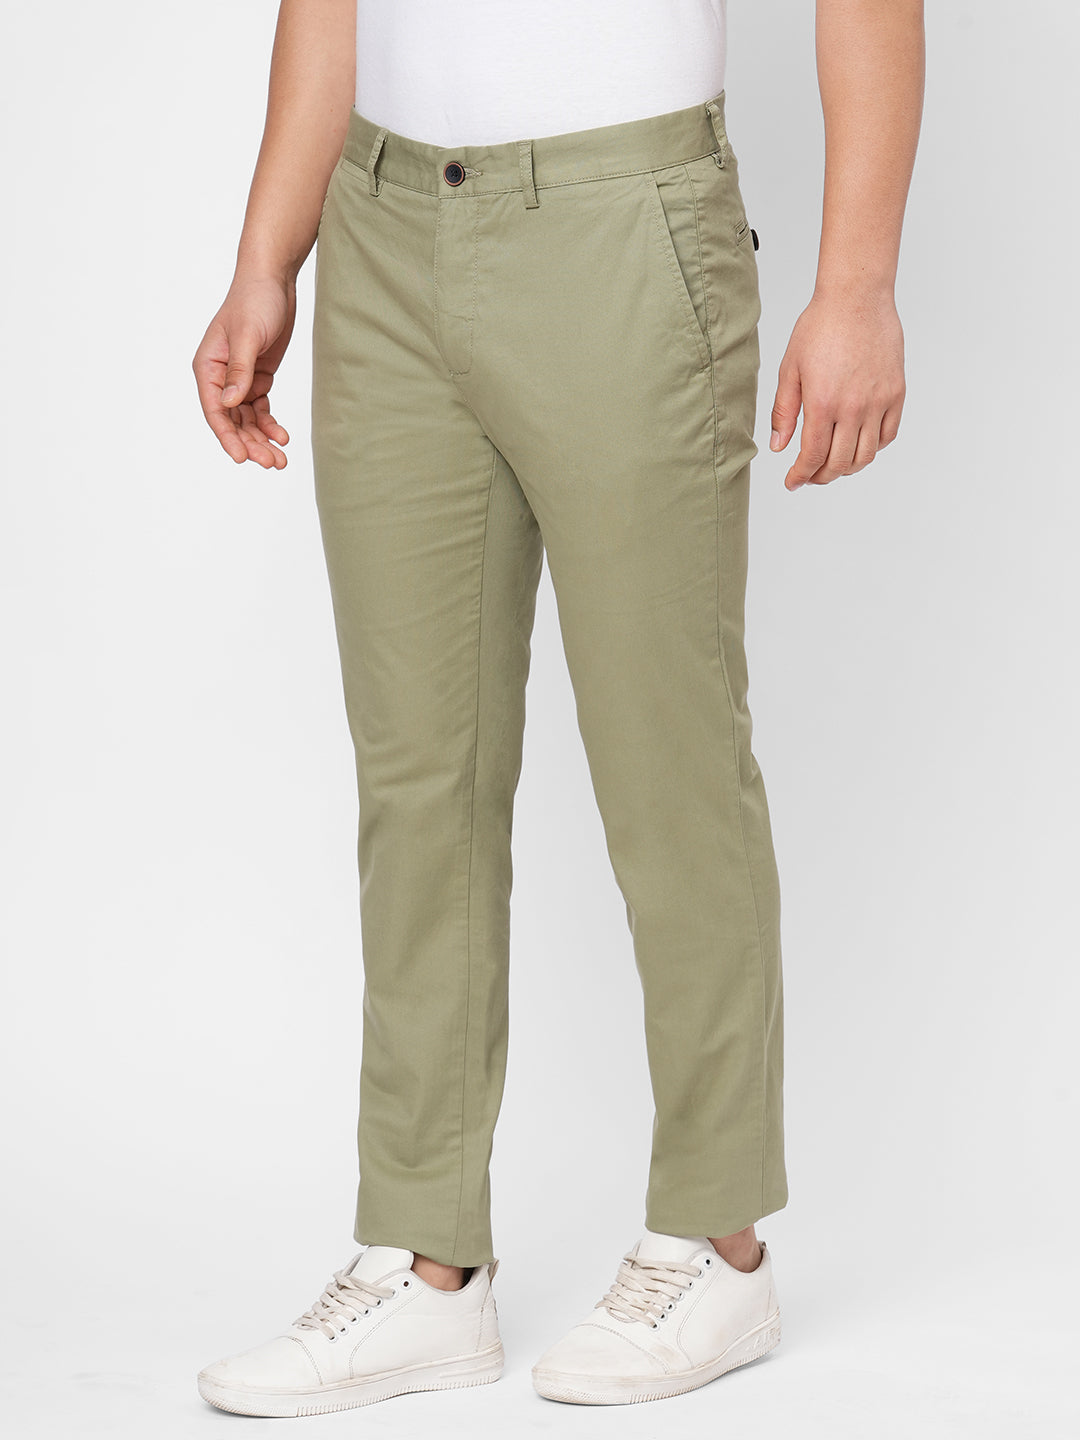 Men's Cotton Lycra Green Slim Fit Pant